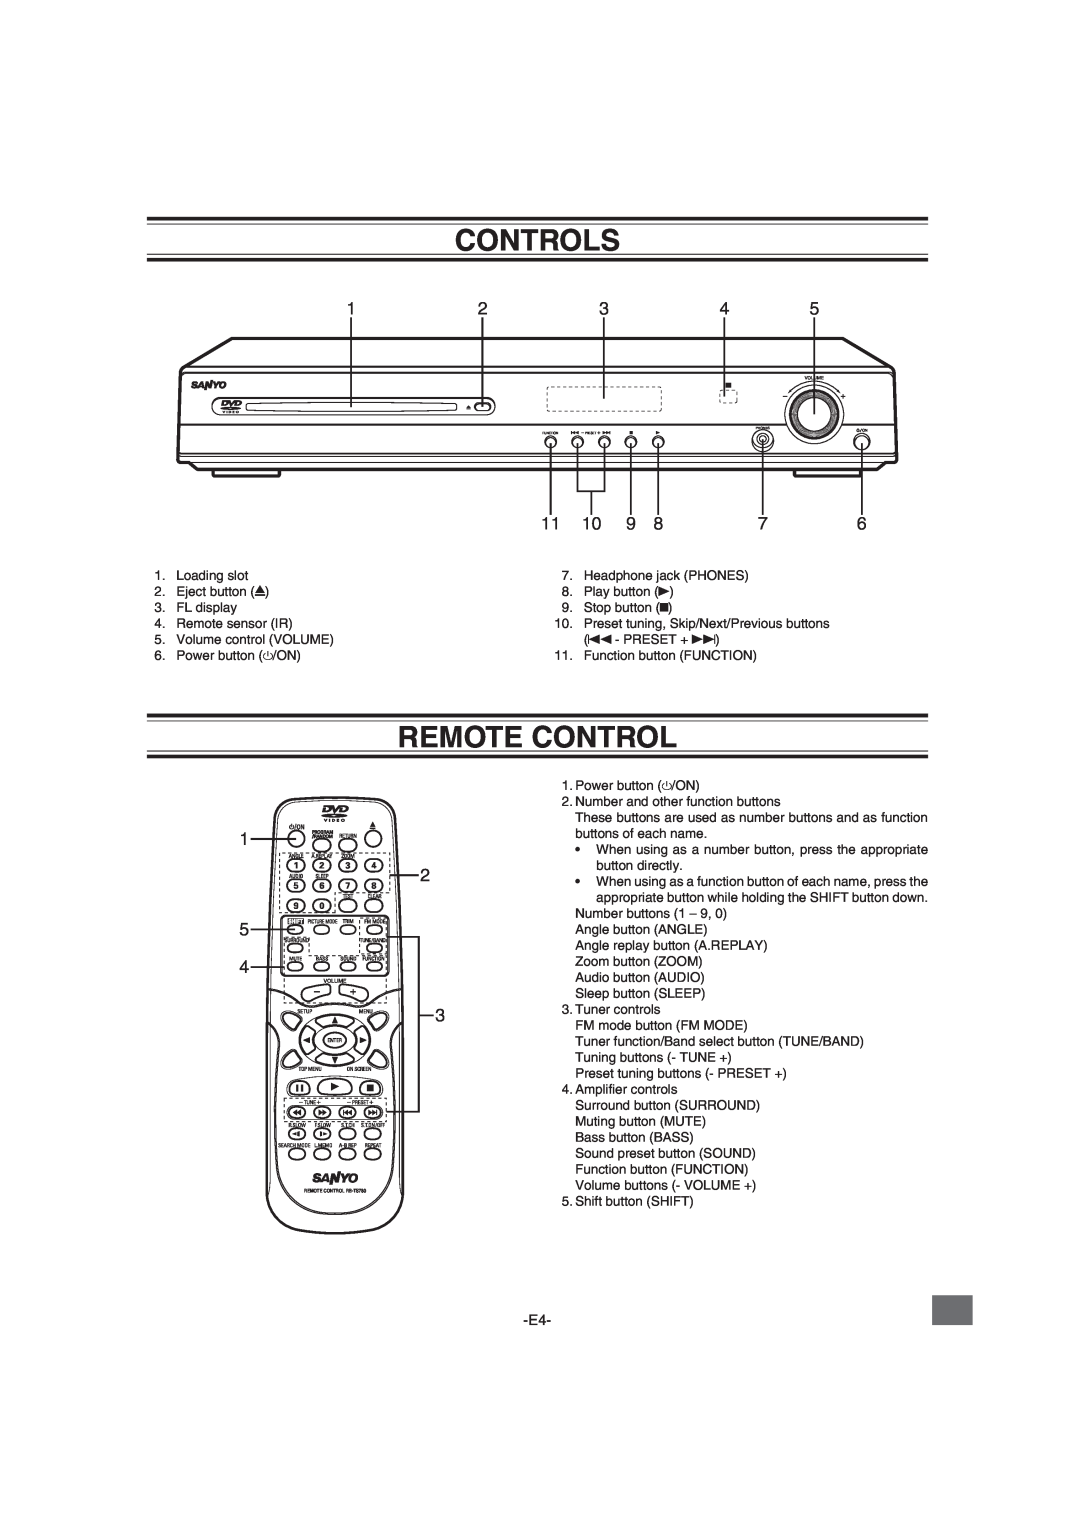 Sanyo DWM-2600 instruction manual Controls, Remote Control 